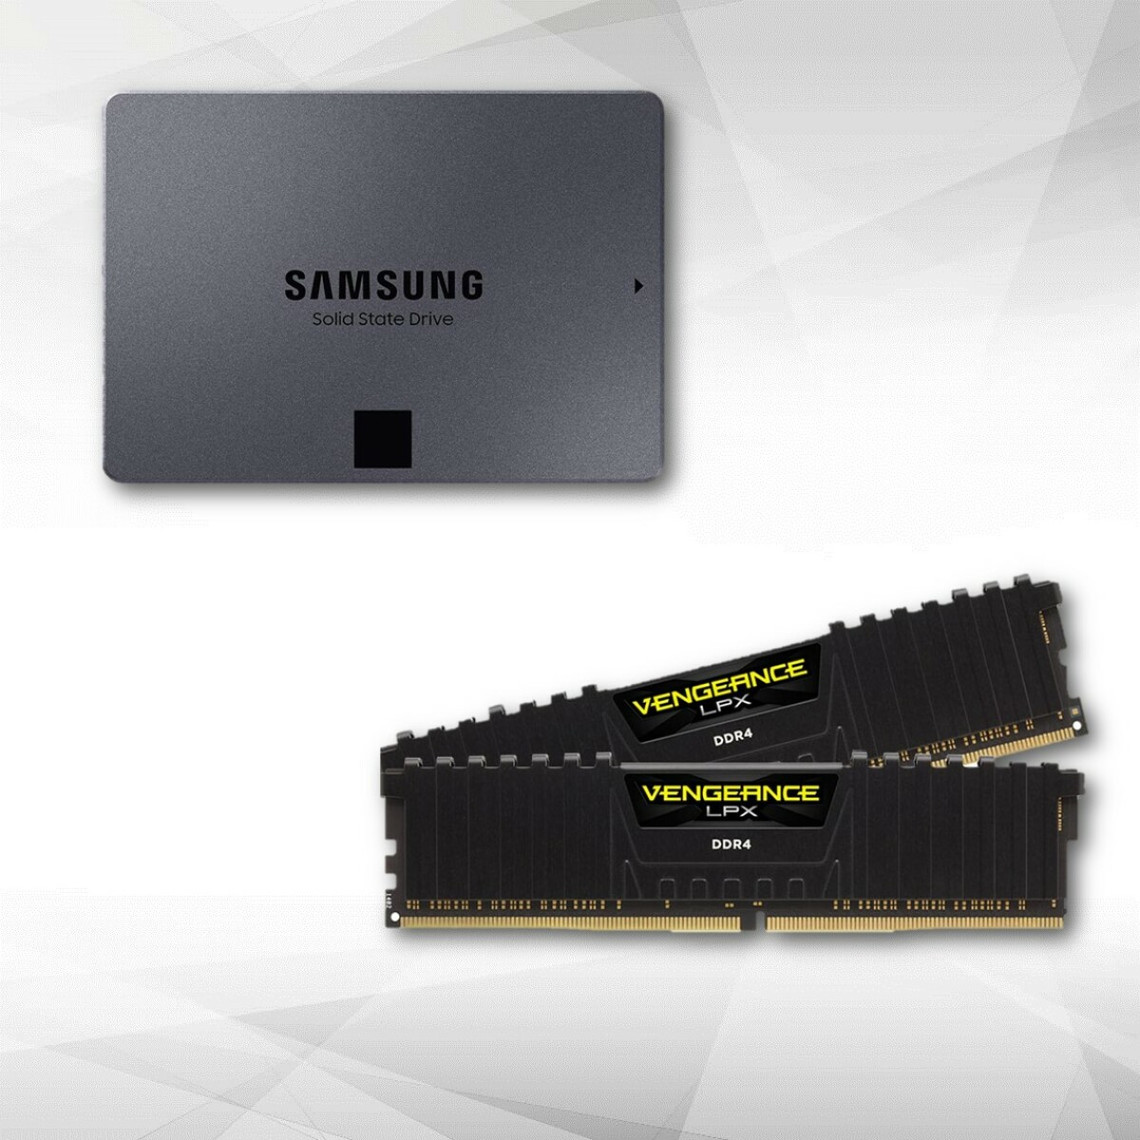 Samsung 870 QVO - 1 To - 2.5 SATA III 6 Go/s + Vengeance LPX 16 Go (2 x 8 Go) - DDR4 3200 MHz Cas 16 Disque SSD interne 2.5 SATA III (6 Go/s) - 560 Mo/s + Kit Dual Channel 2 x 8 Go DDR4 PC4-25600 - Cas 16 - Noir - CMK16GX4M2B3200C16